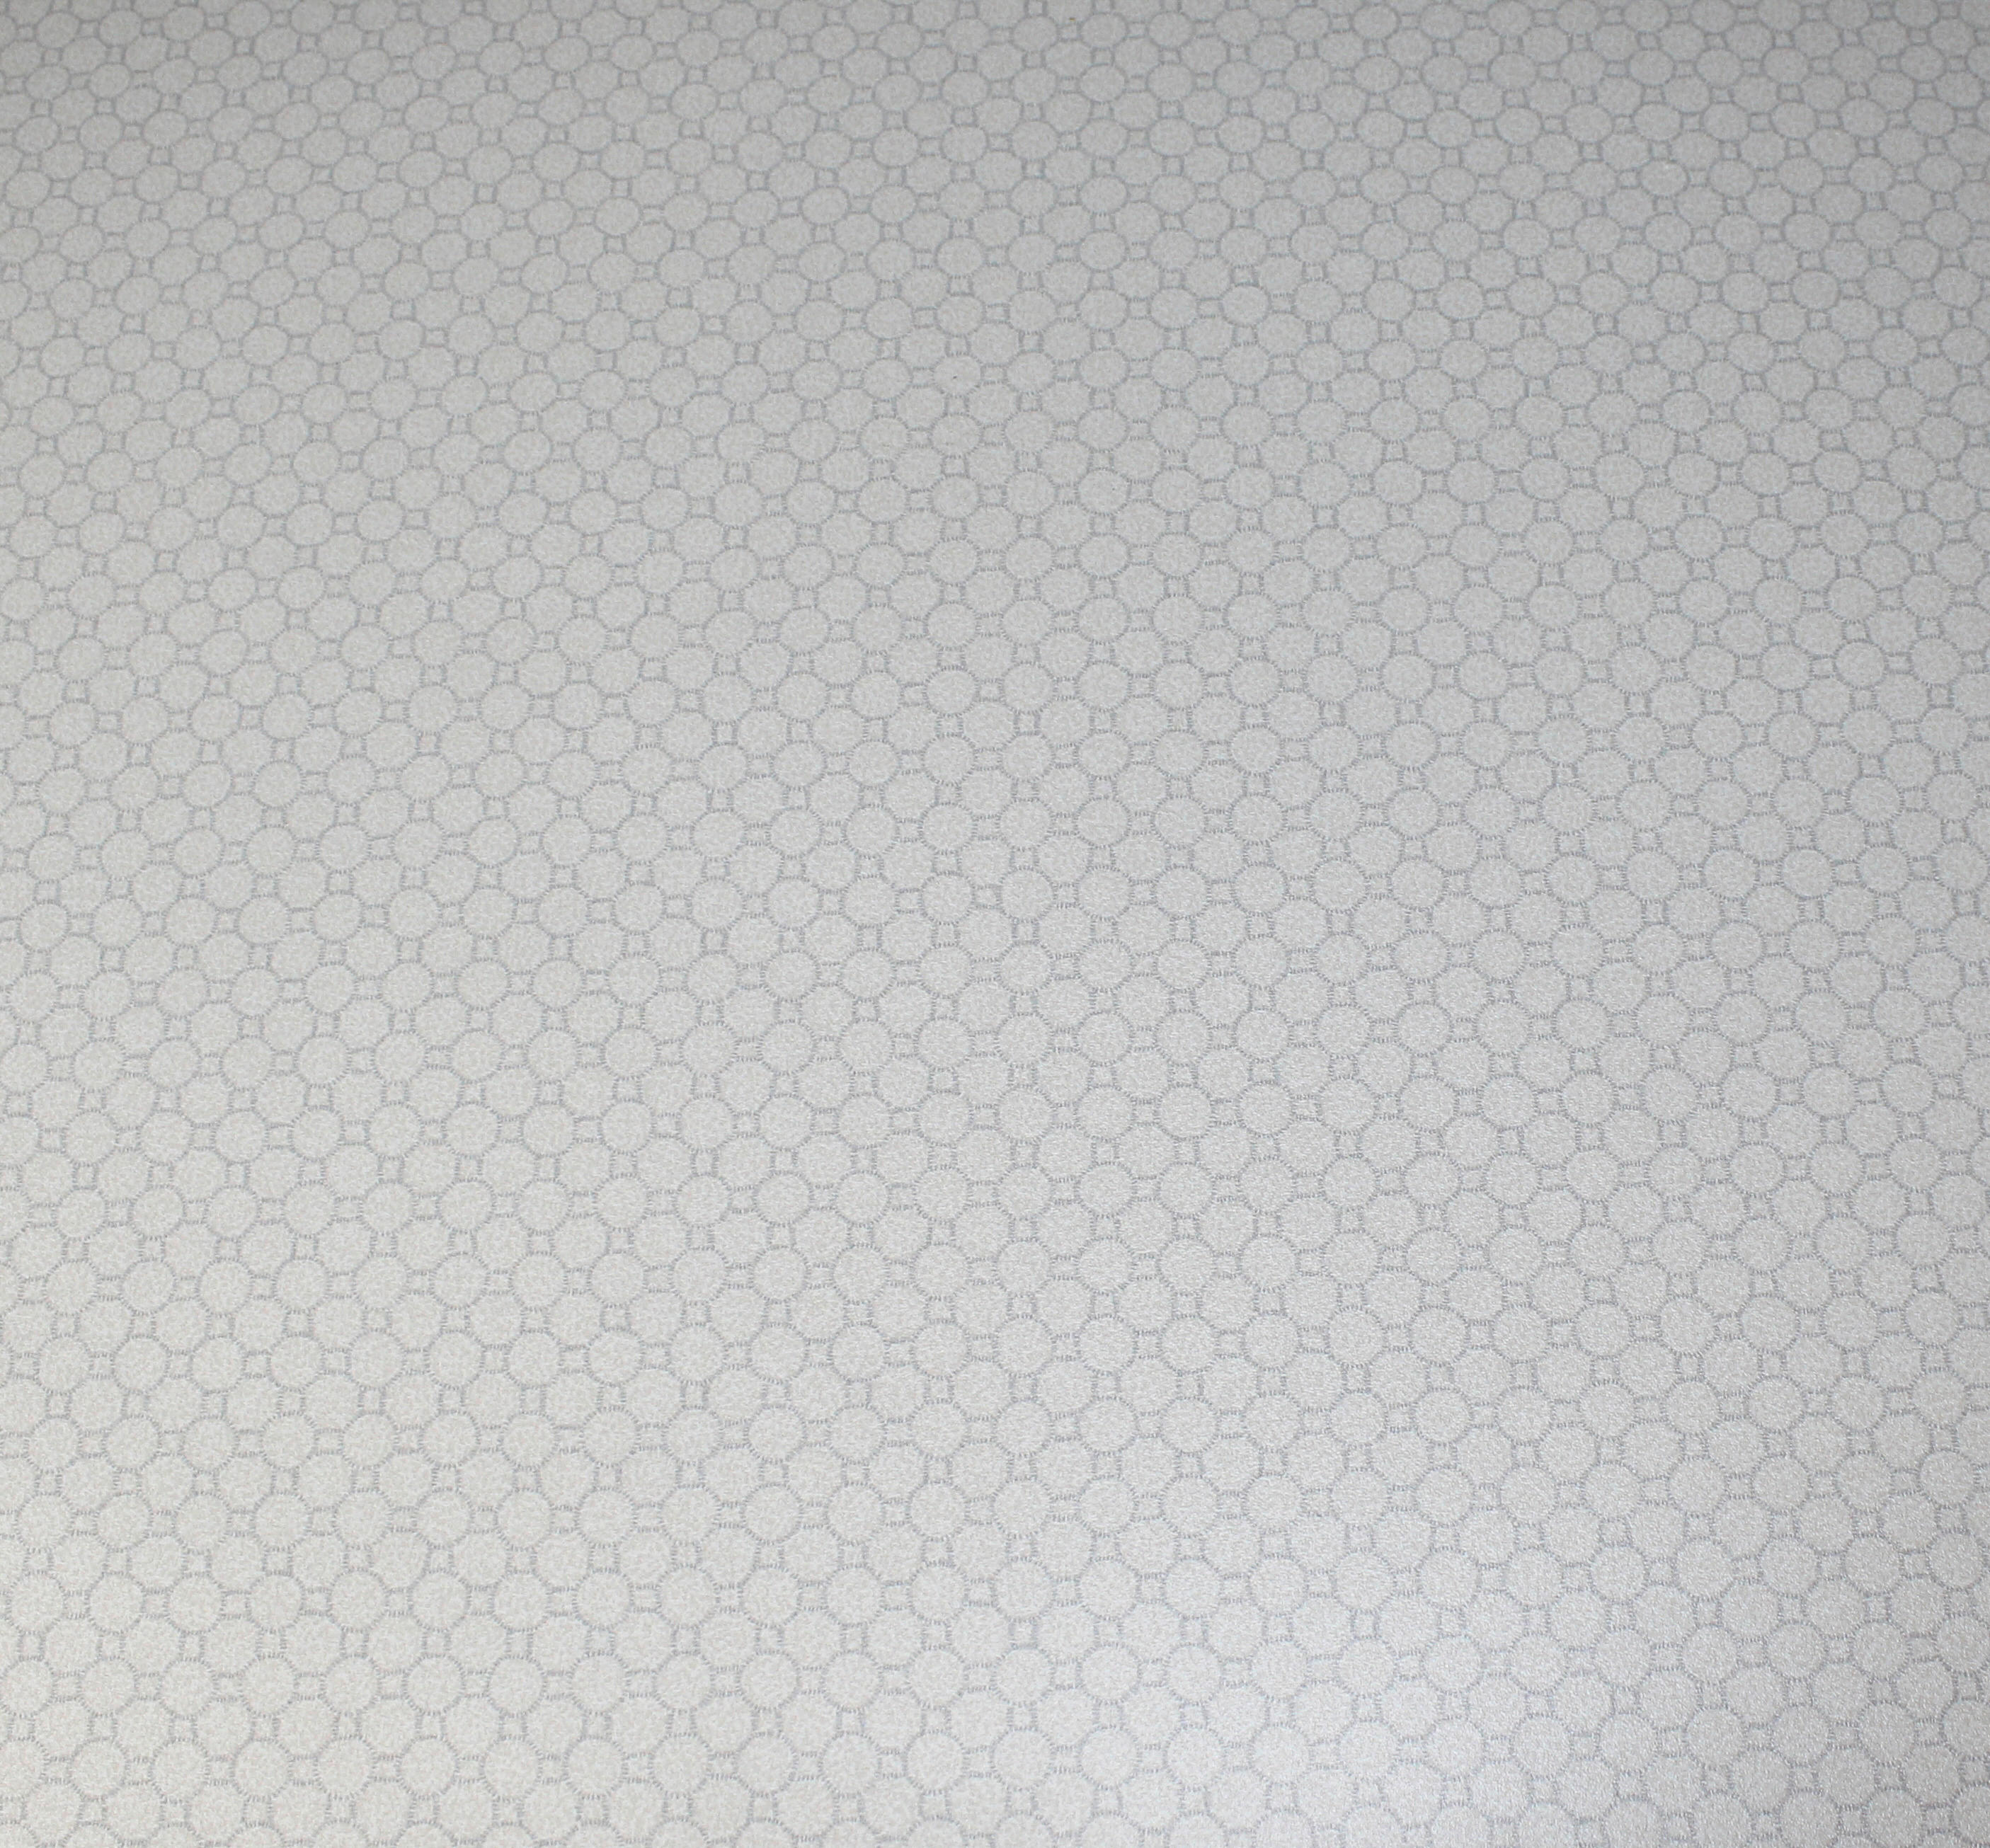 Schubkastenschrank Top weiß matt B/H/T: ca. 50x85x50 cm Top - weiß (50,00/85,00/50,00cm)